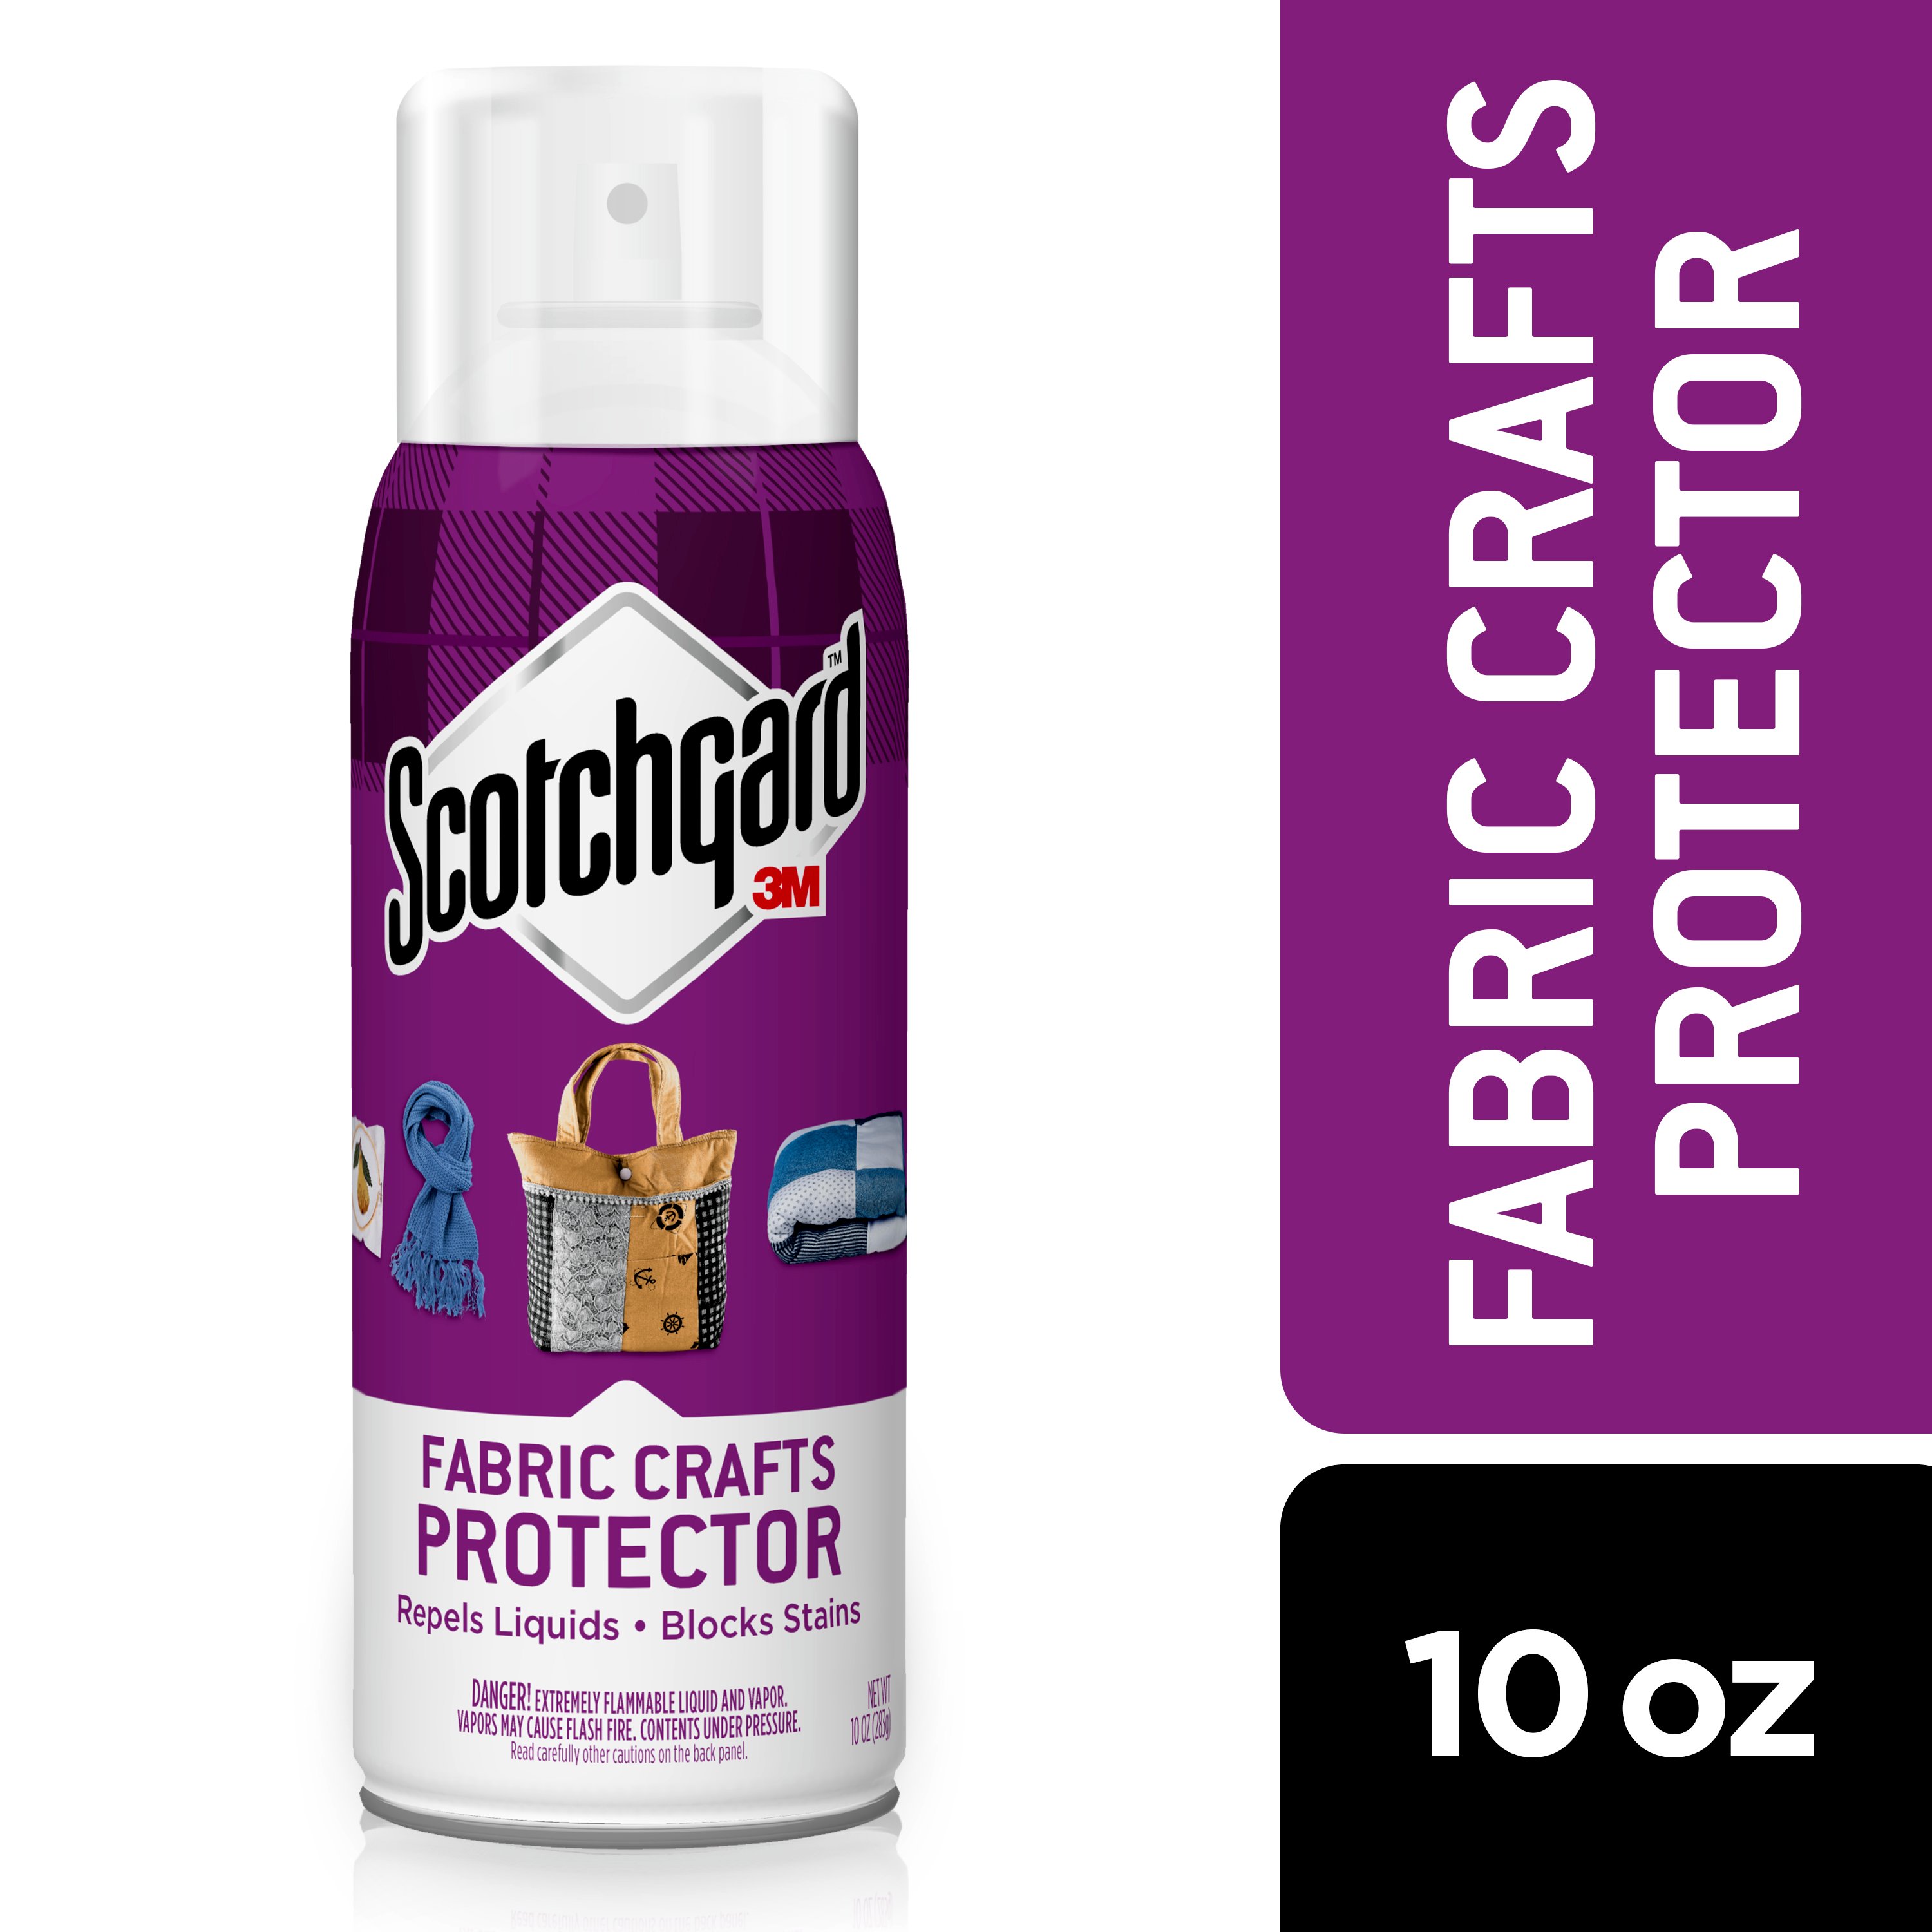 Scotchgard Fabric Crafts Protector, 10 Oz. - image 1 of 4